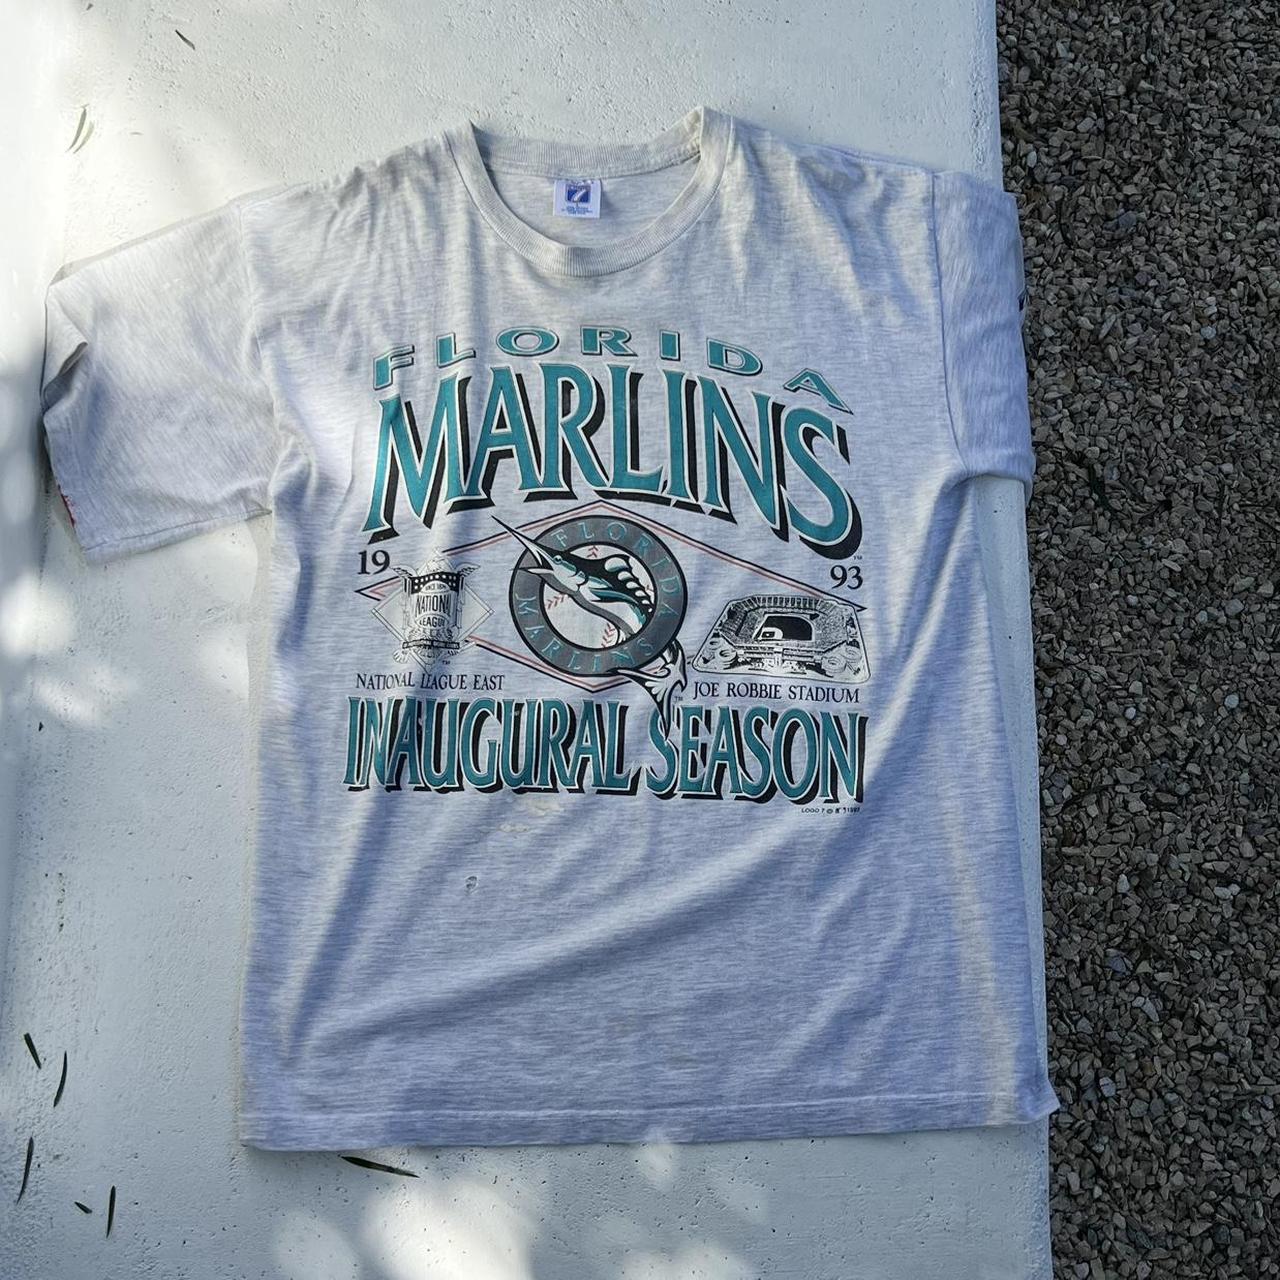 Vintage Florida Marlins T-shirt Men's Medium White 1993 Inaugural Season